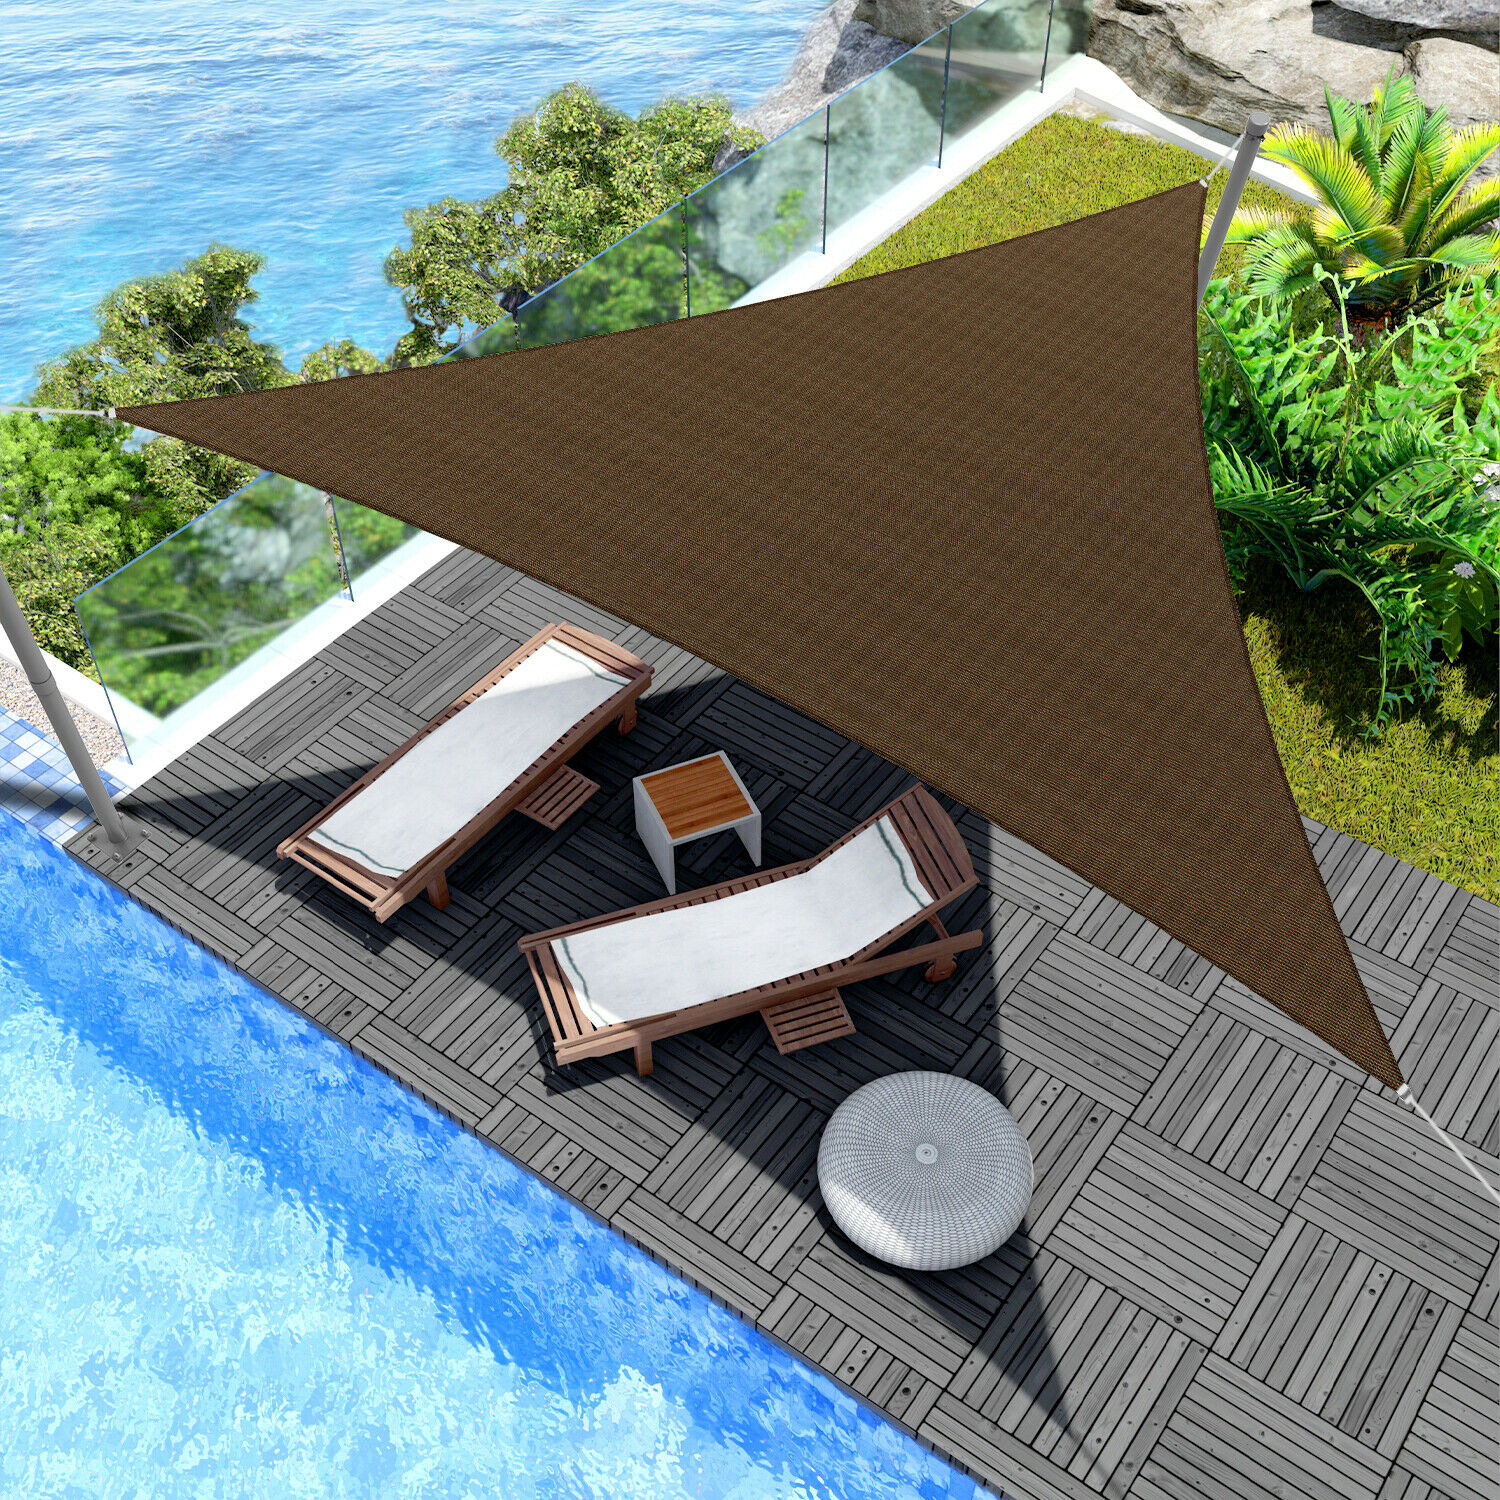 8'x8'x8' Triangle Sun Shade Sail Fabric Garden Outdoor Canopy Patio Pool Cover